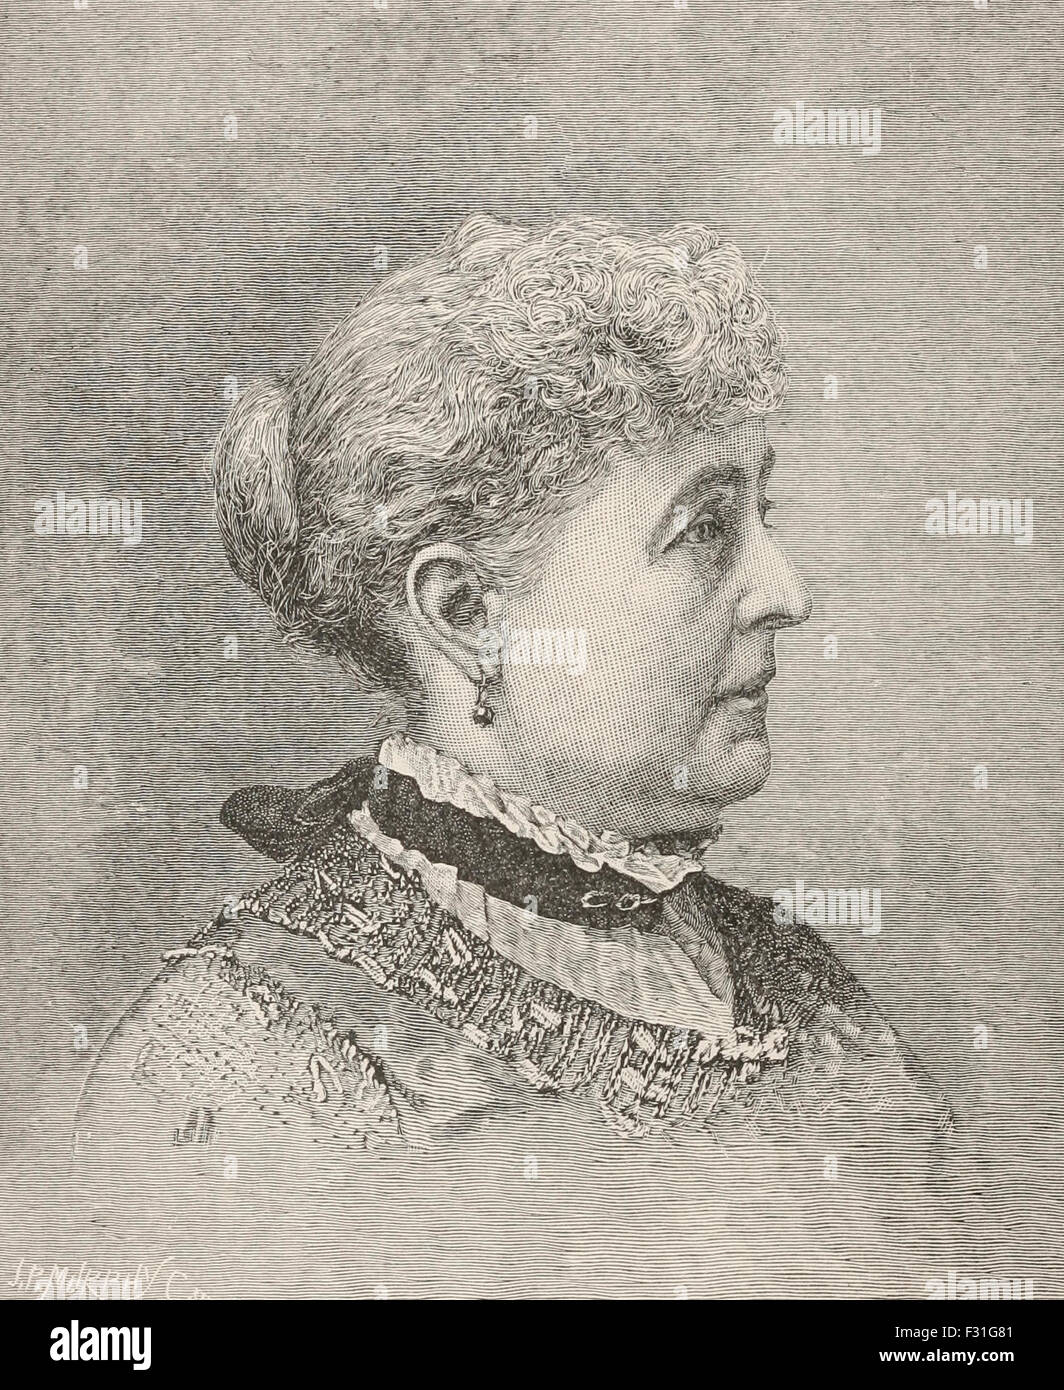 Frau Benjamin Harrison - Ehefrau von General Harrison - Caroline Stockfoto